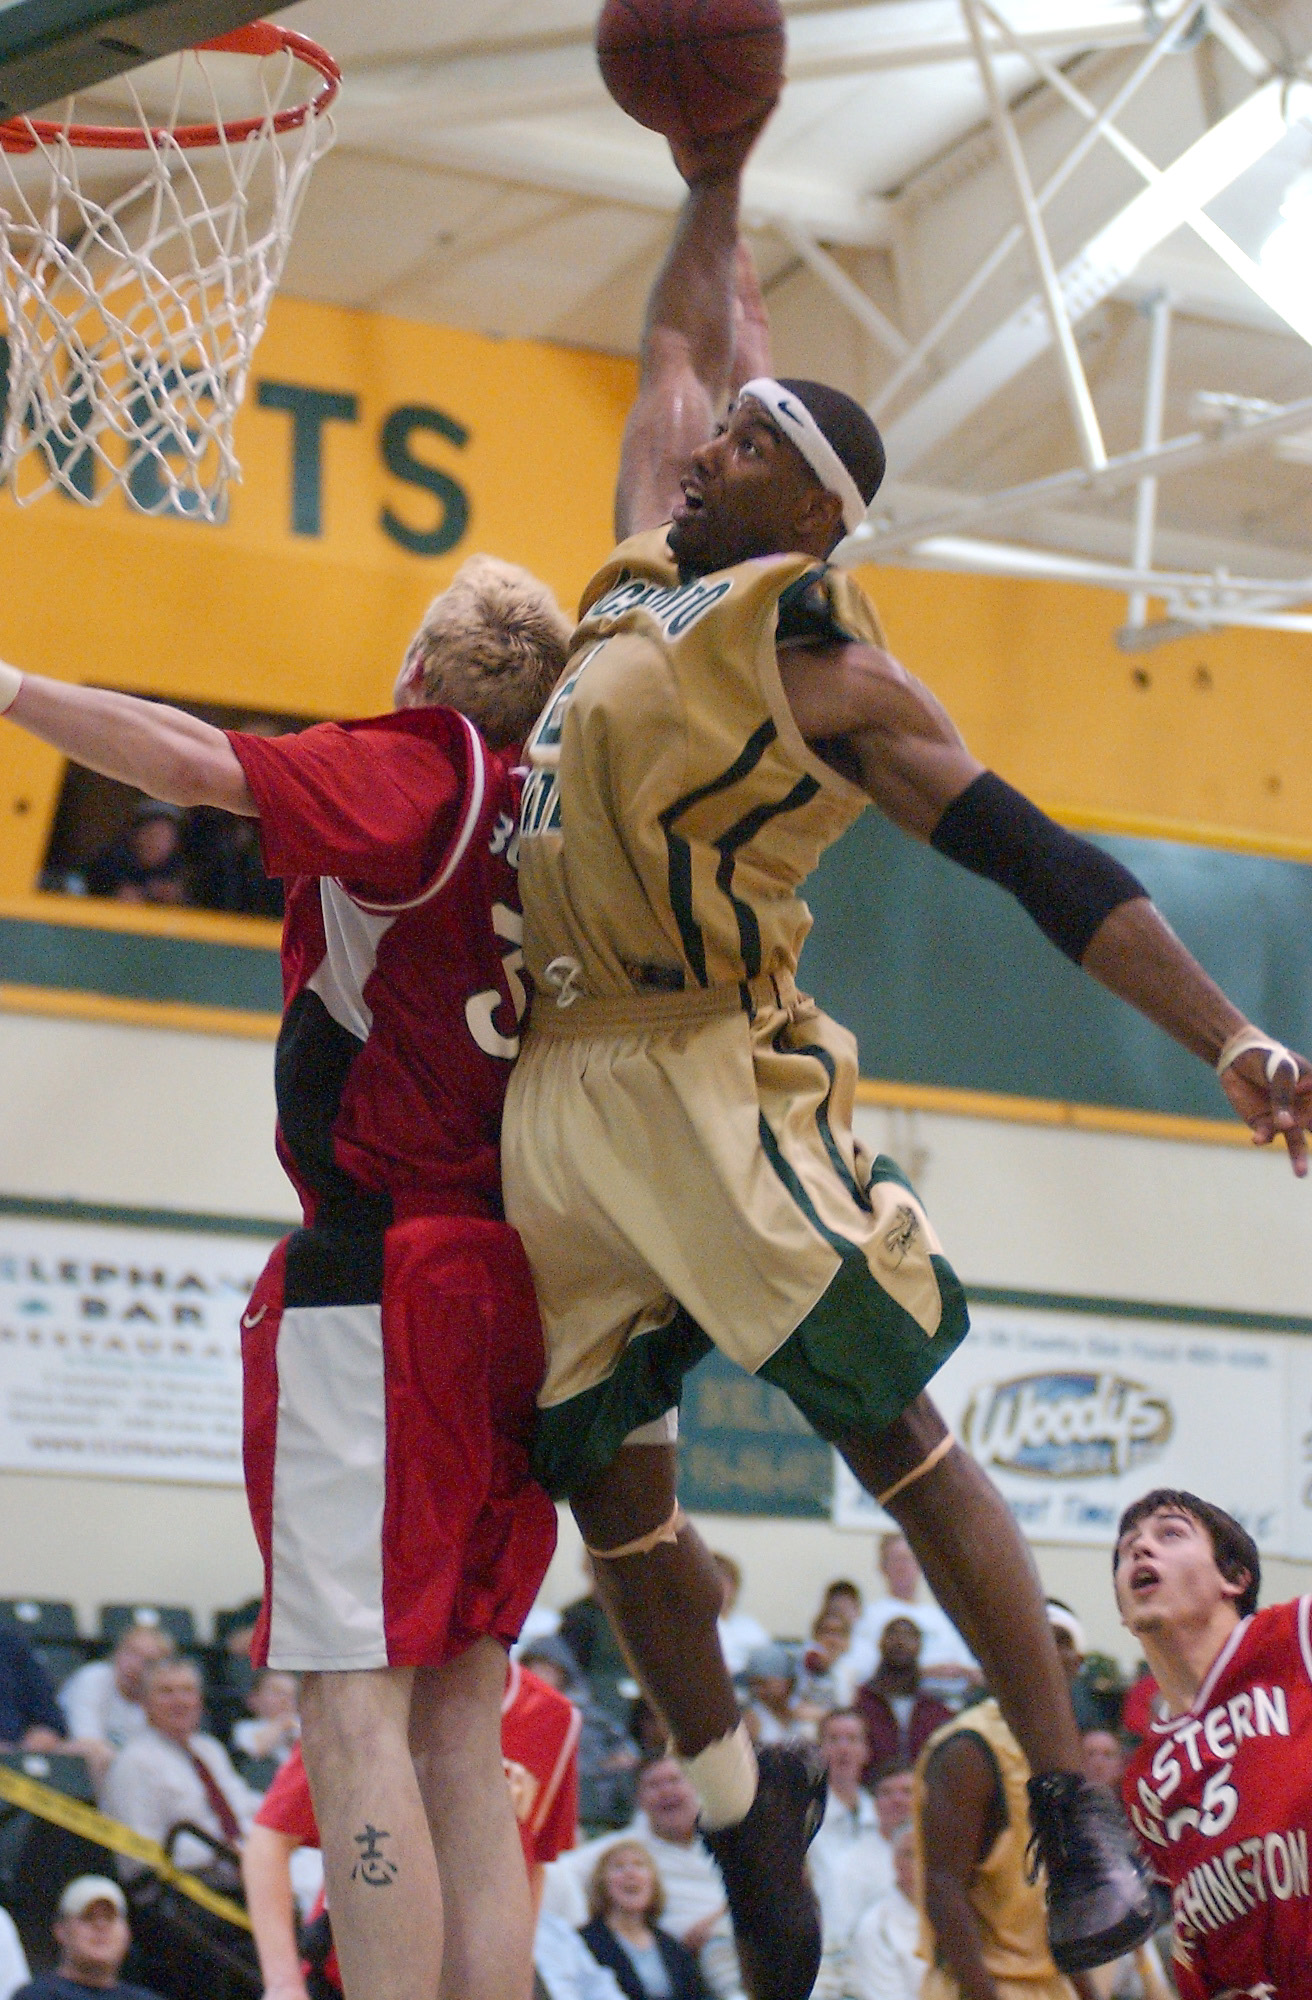 Jameel Pugh in a Sac State basketball uniform dunking